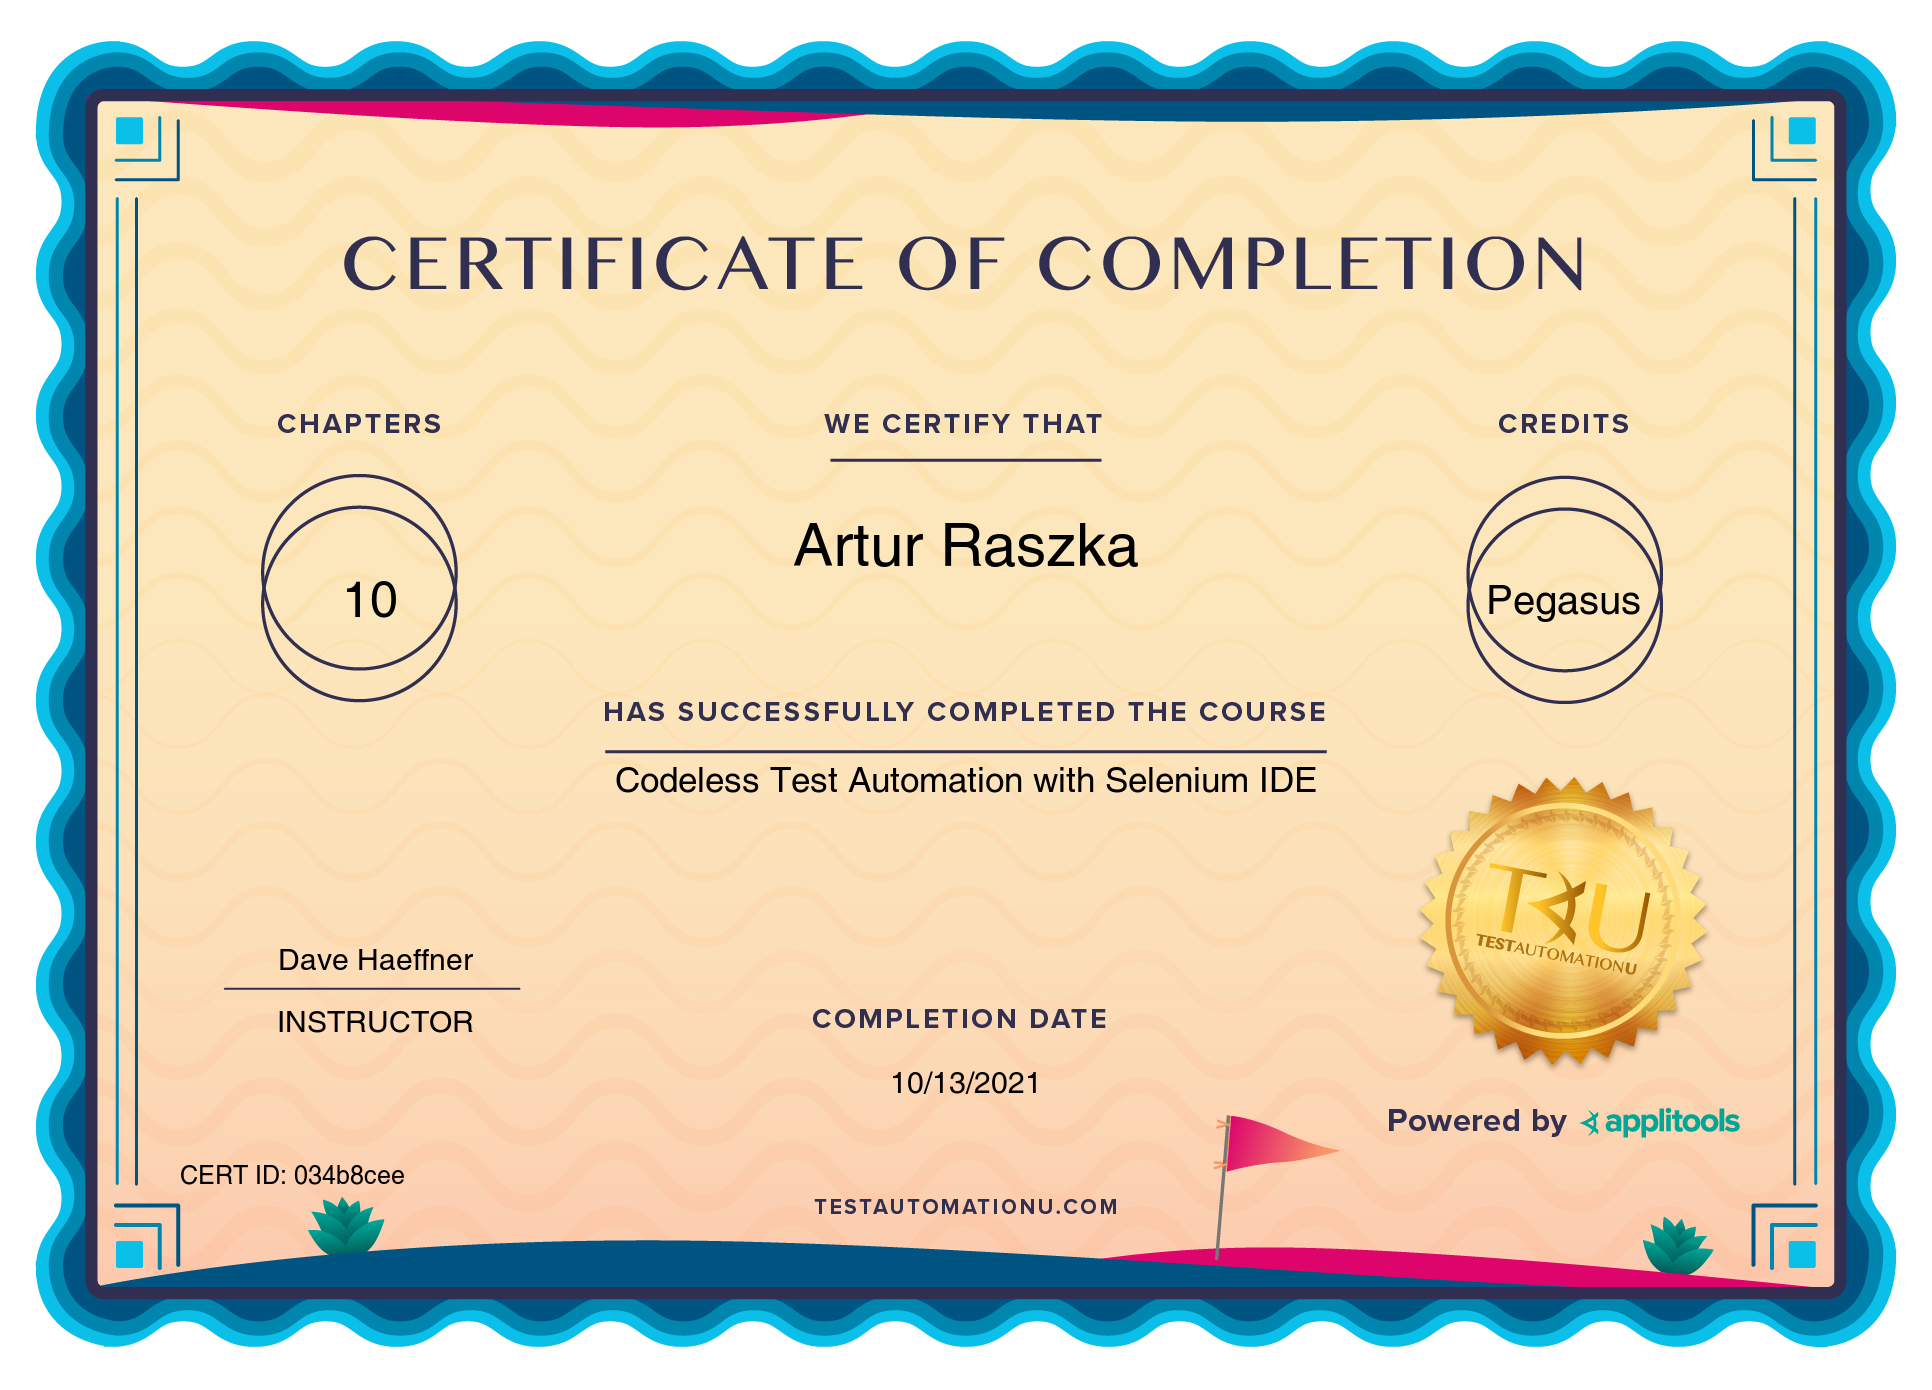 certificates_TAU-034b8cee[1].png